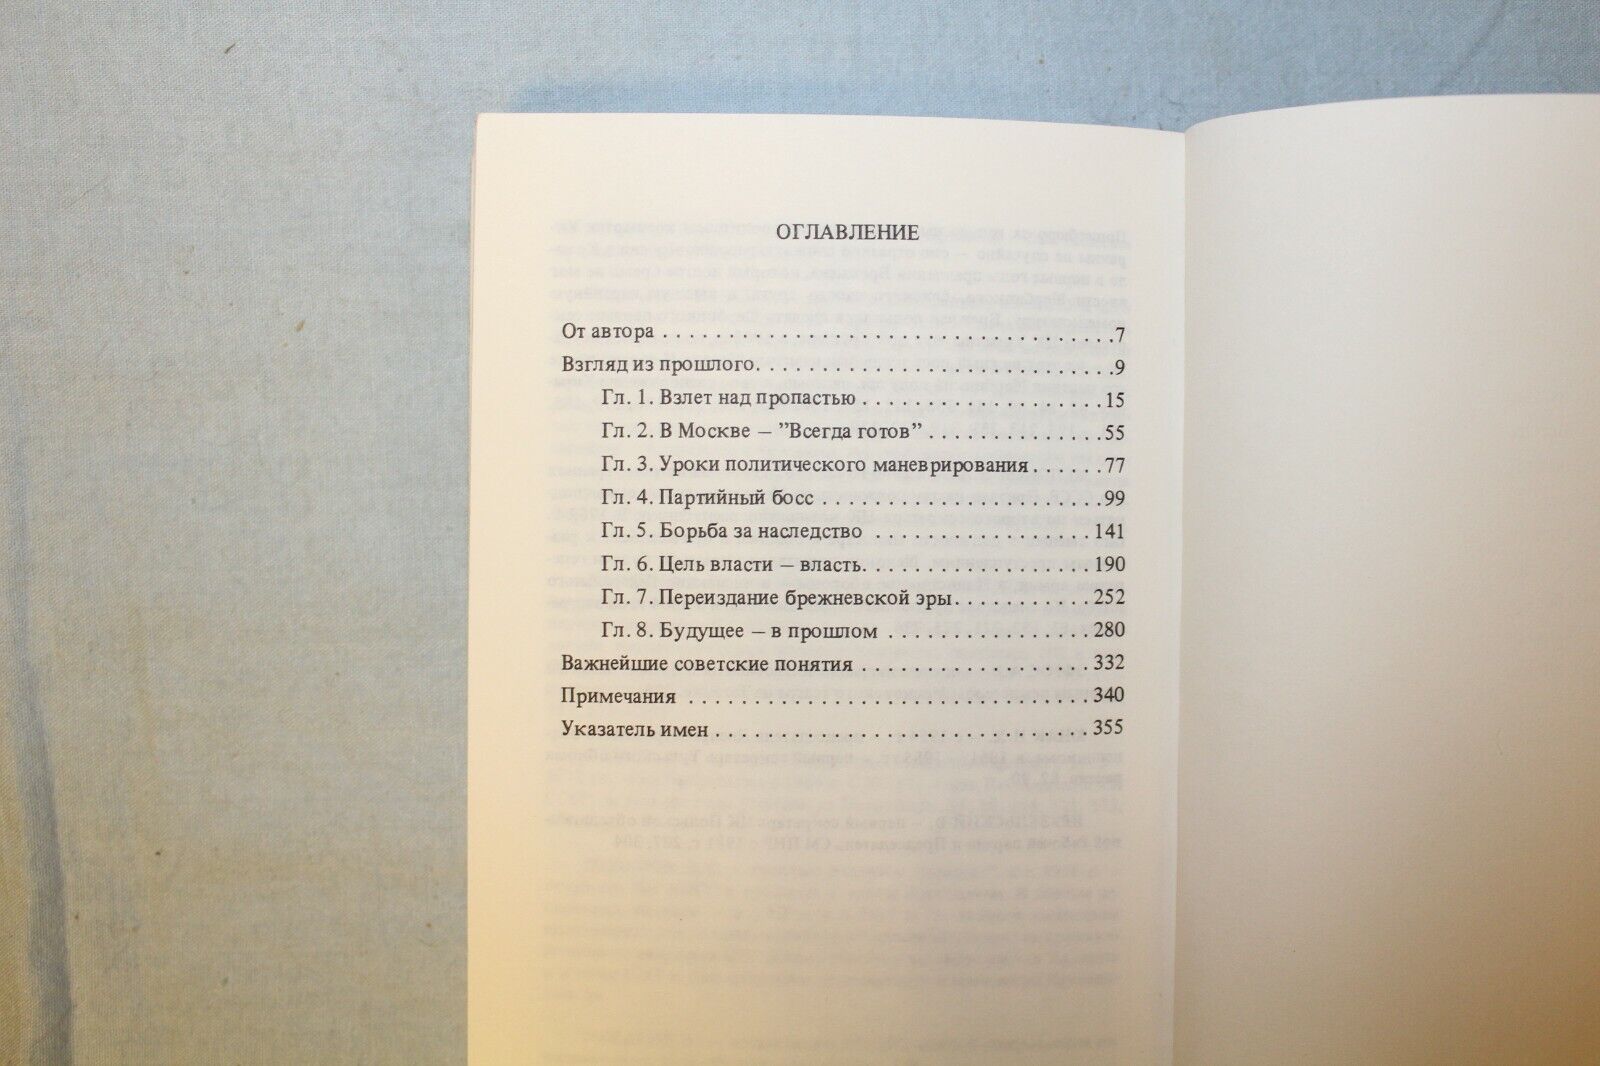 11439.Russian Book: Ilya Zemtsov. Chernenko: Soviet Union in Eve of Perestroika